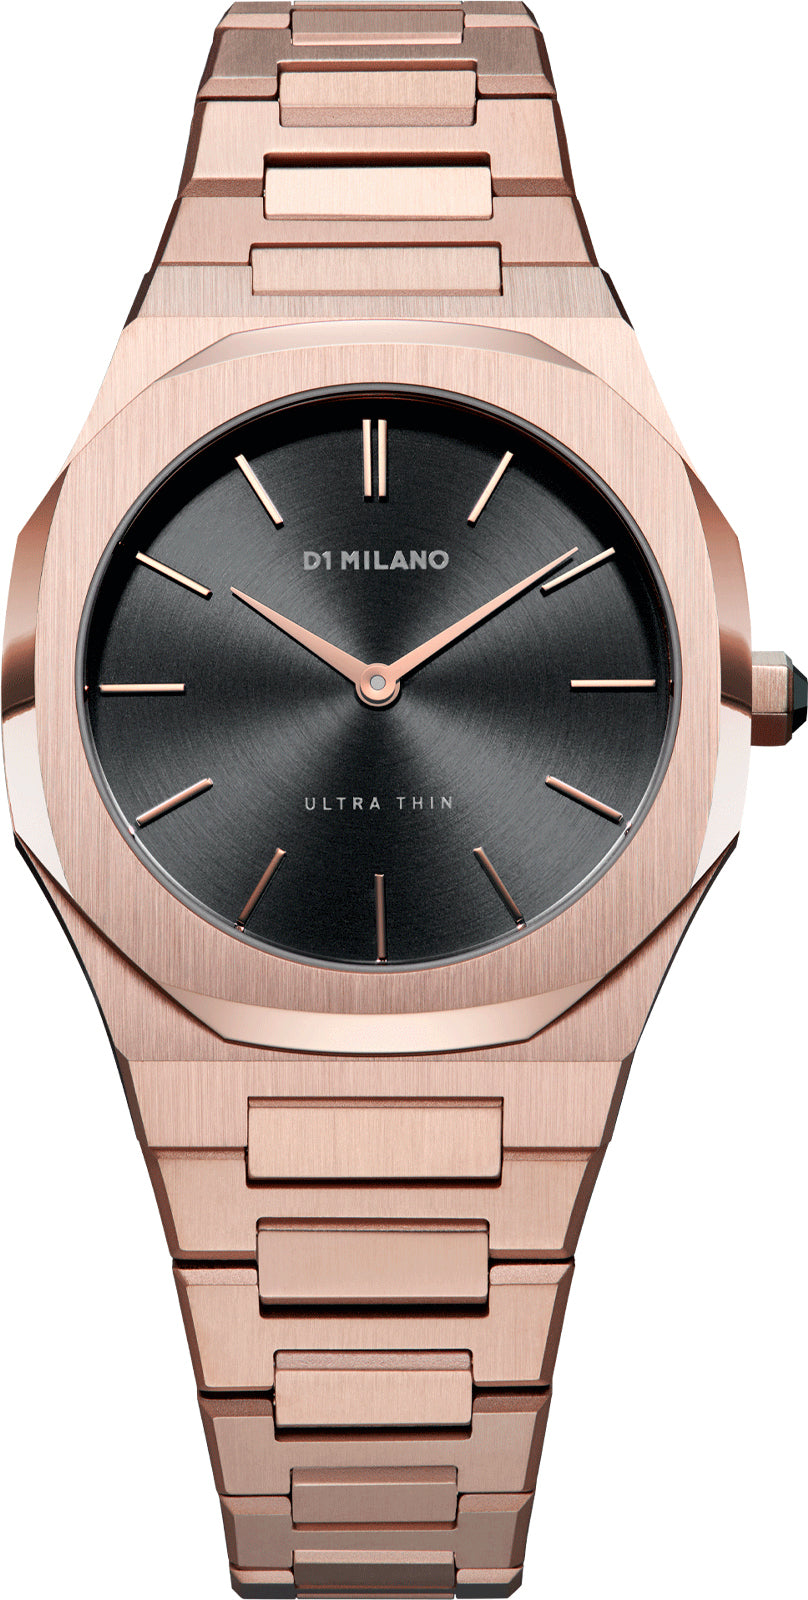 Photos - Wrist Watch Milano D1  Watch Ultra Thin DLM-080 